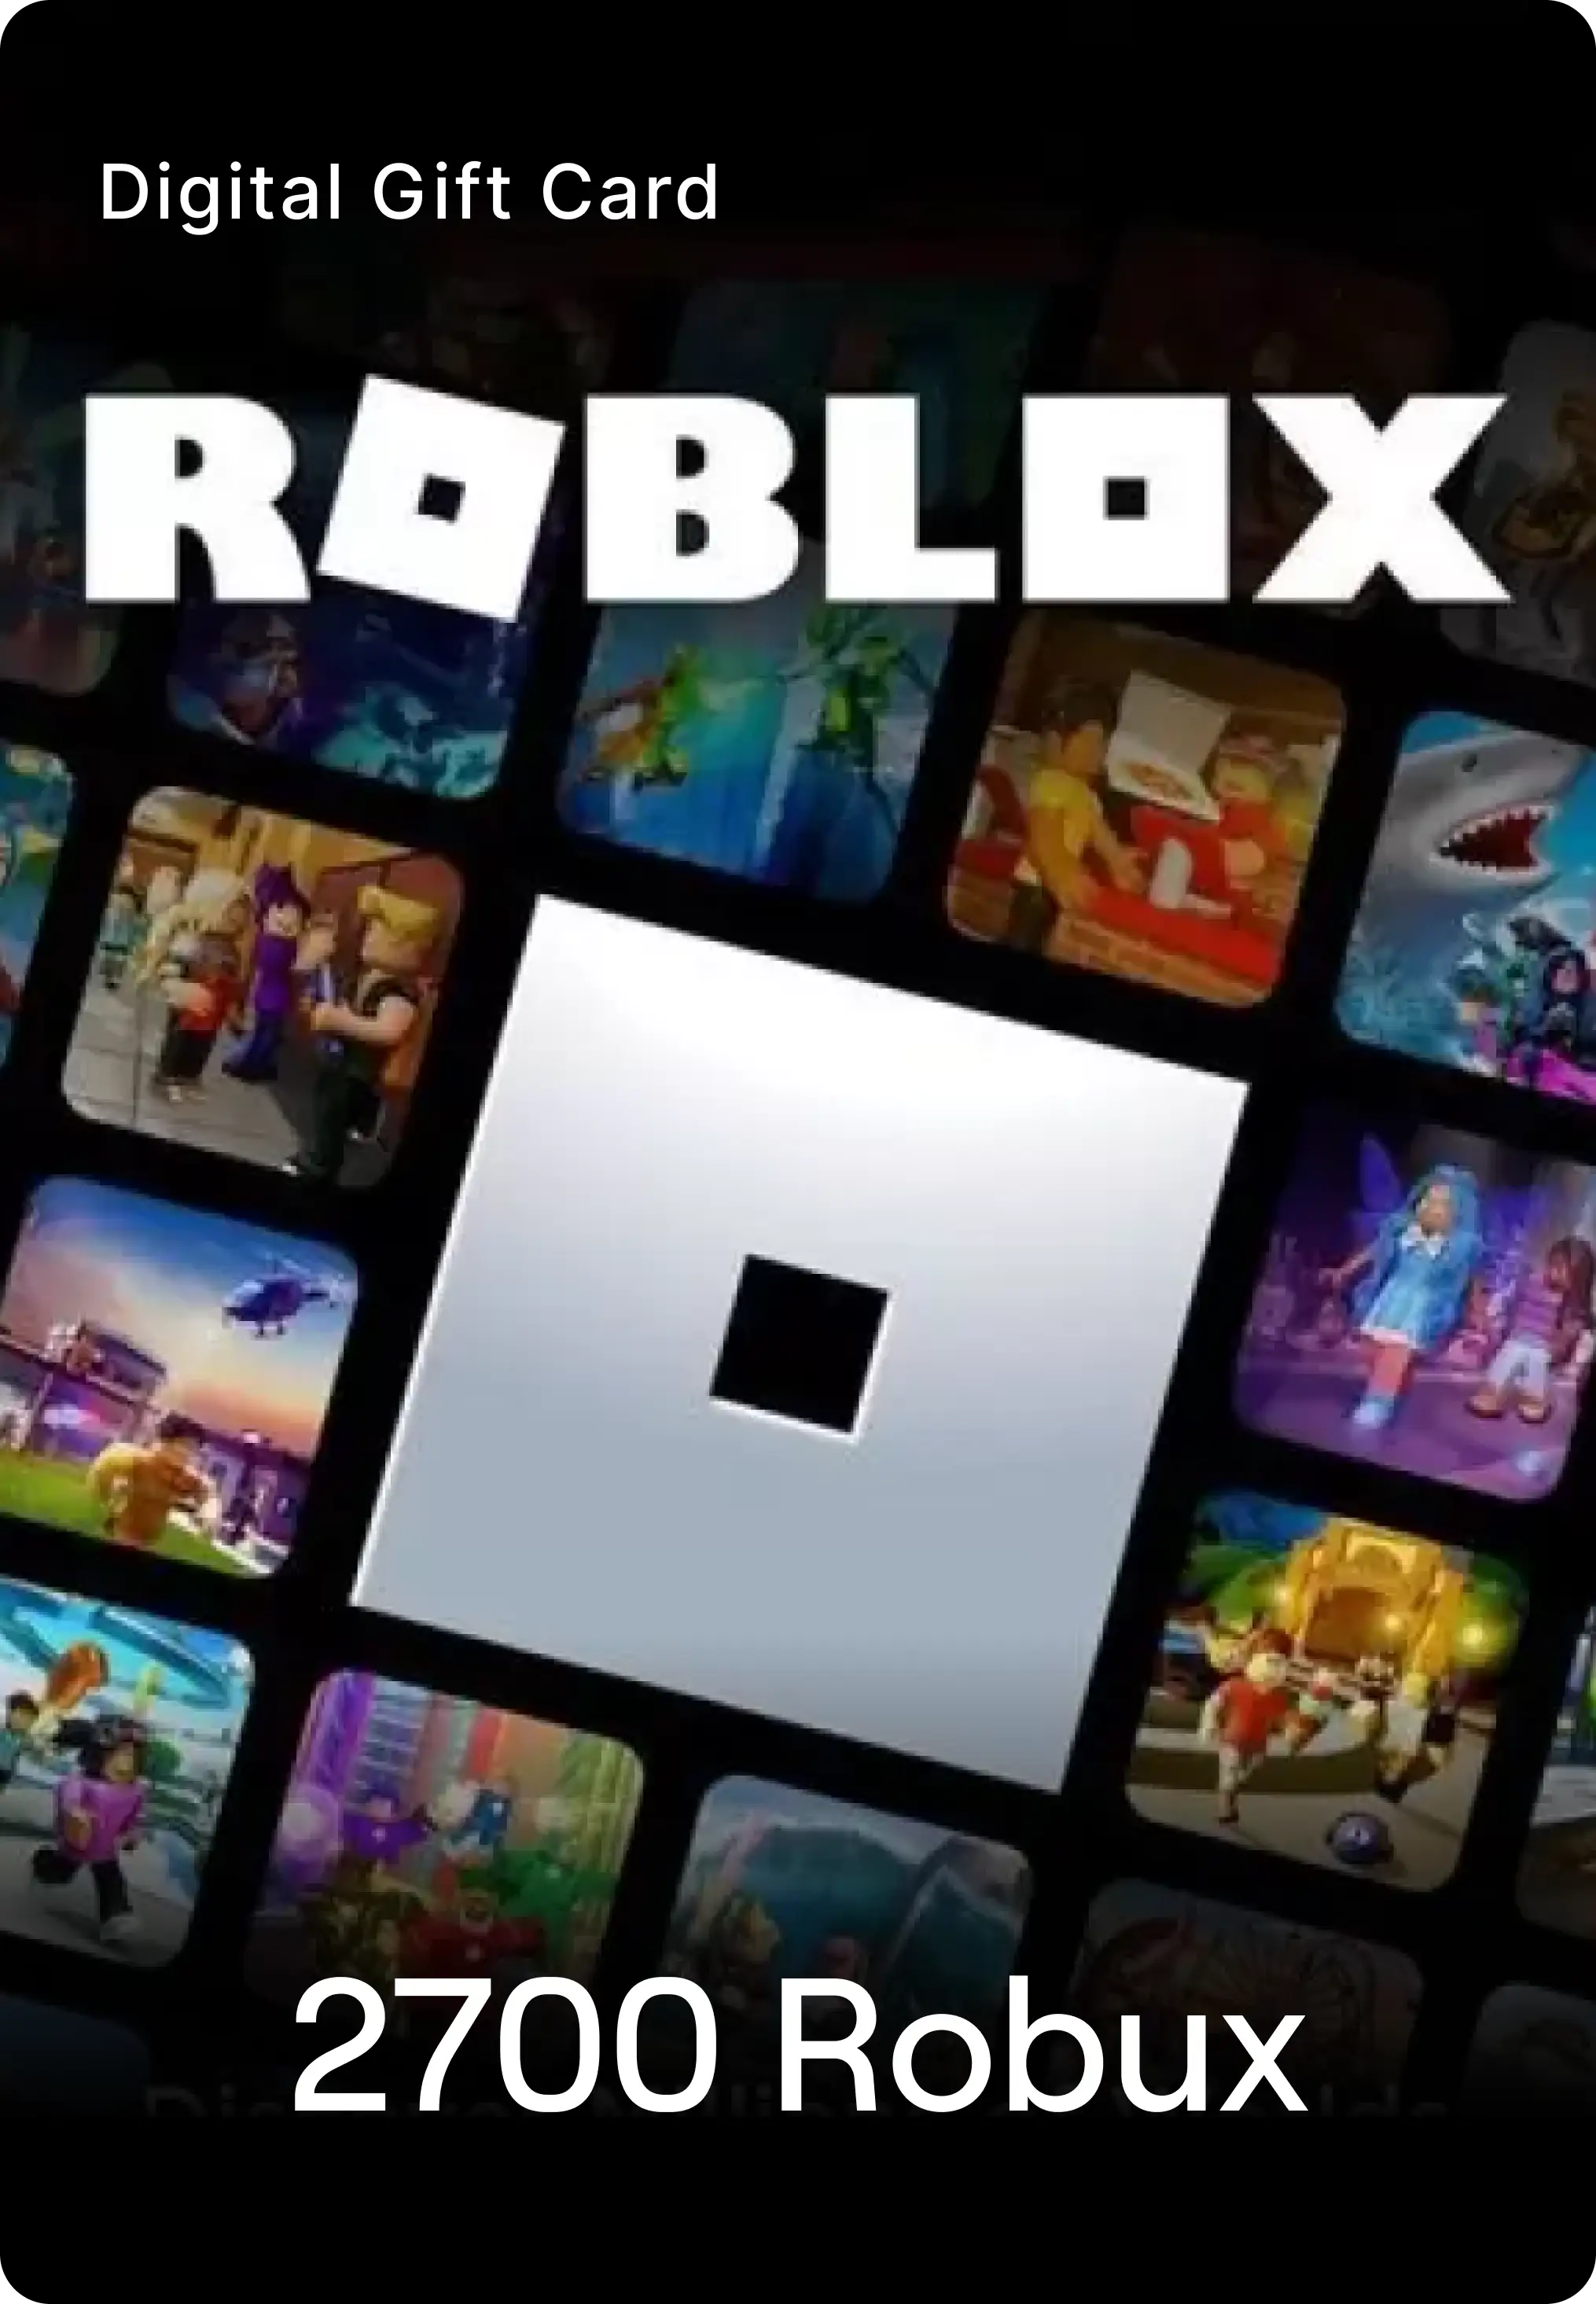 Roblox - 2700 Robux - Digital Code